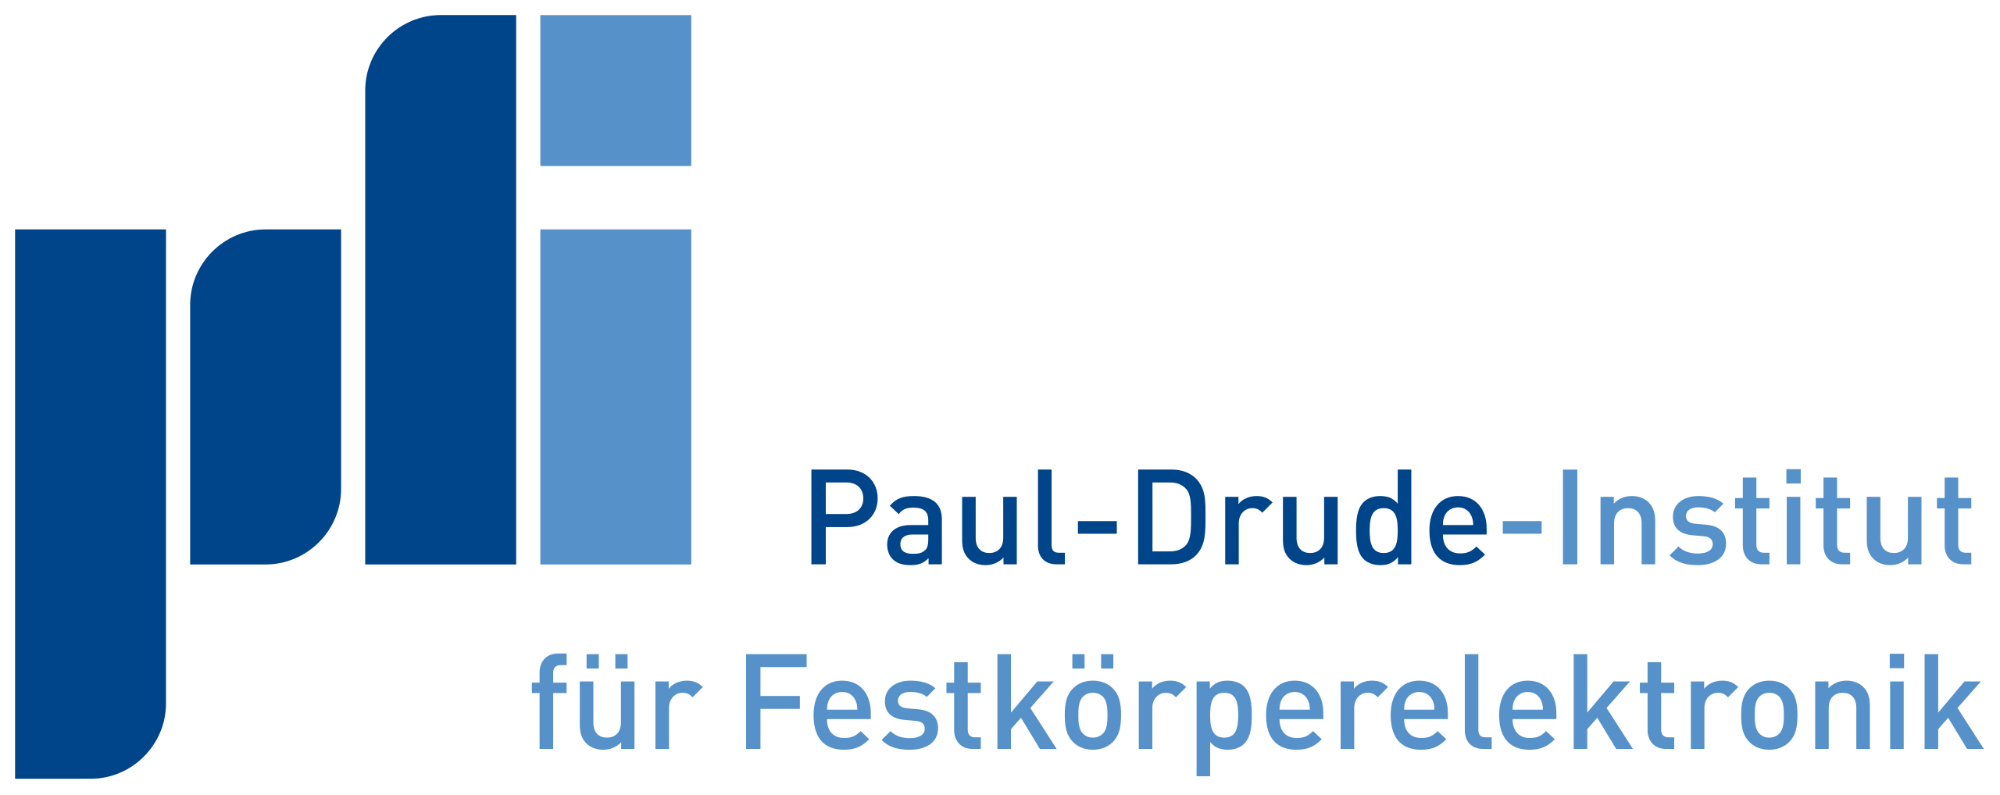 Logo: Paul-Drude-Institut für Festkörperelektronik